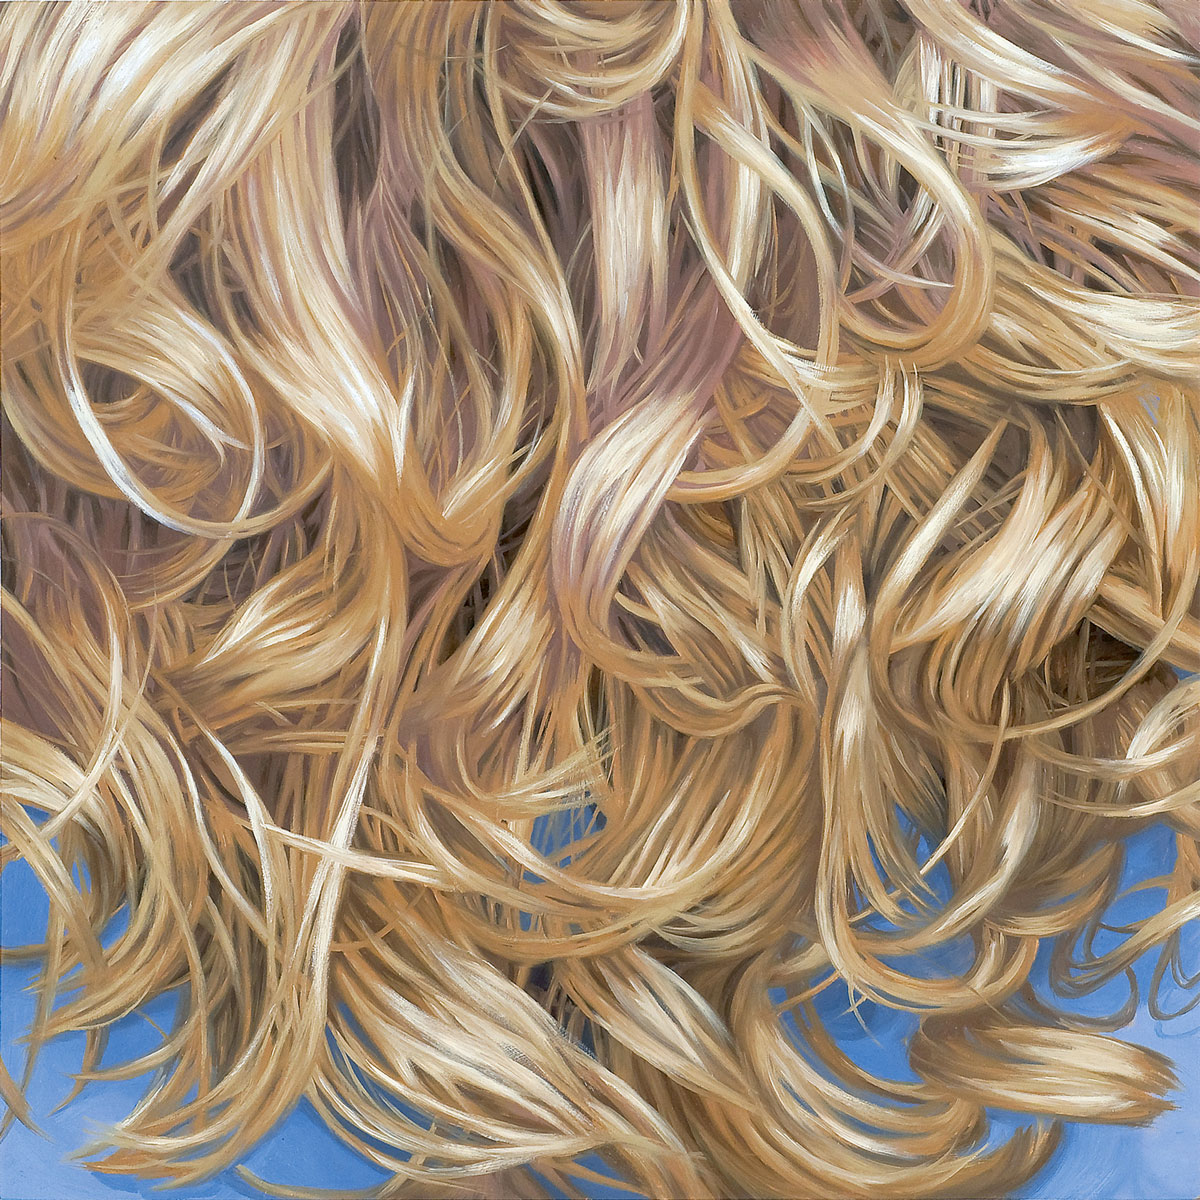  Blond, Curls II, 2008.